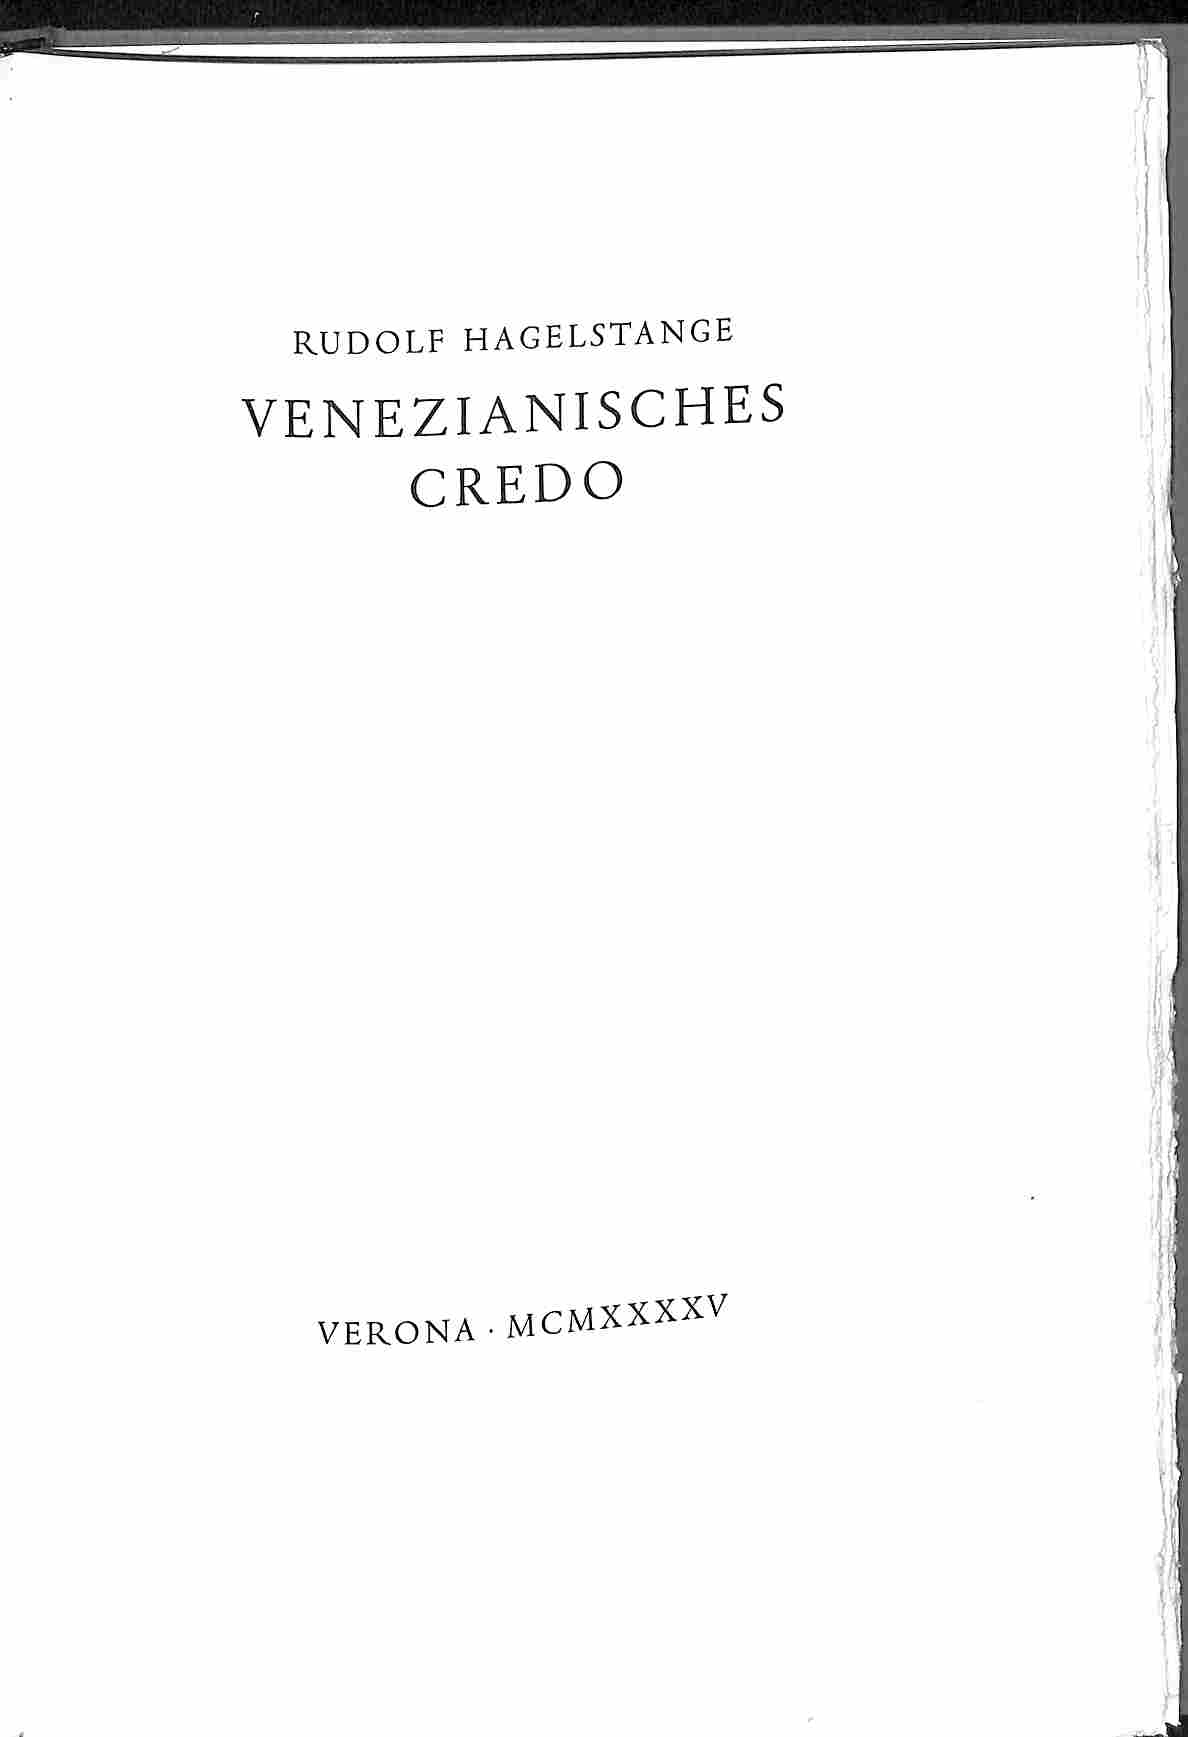 Venezianisches credo